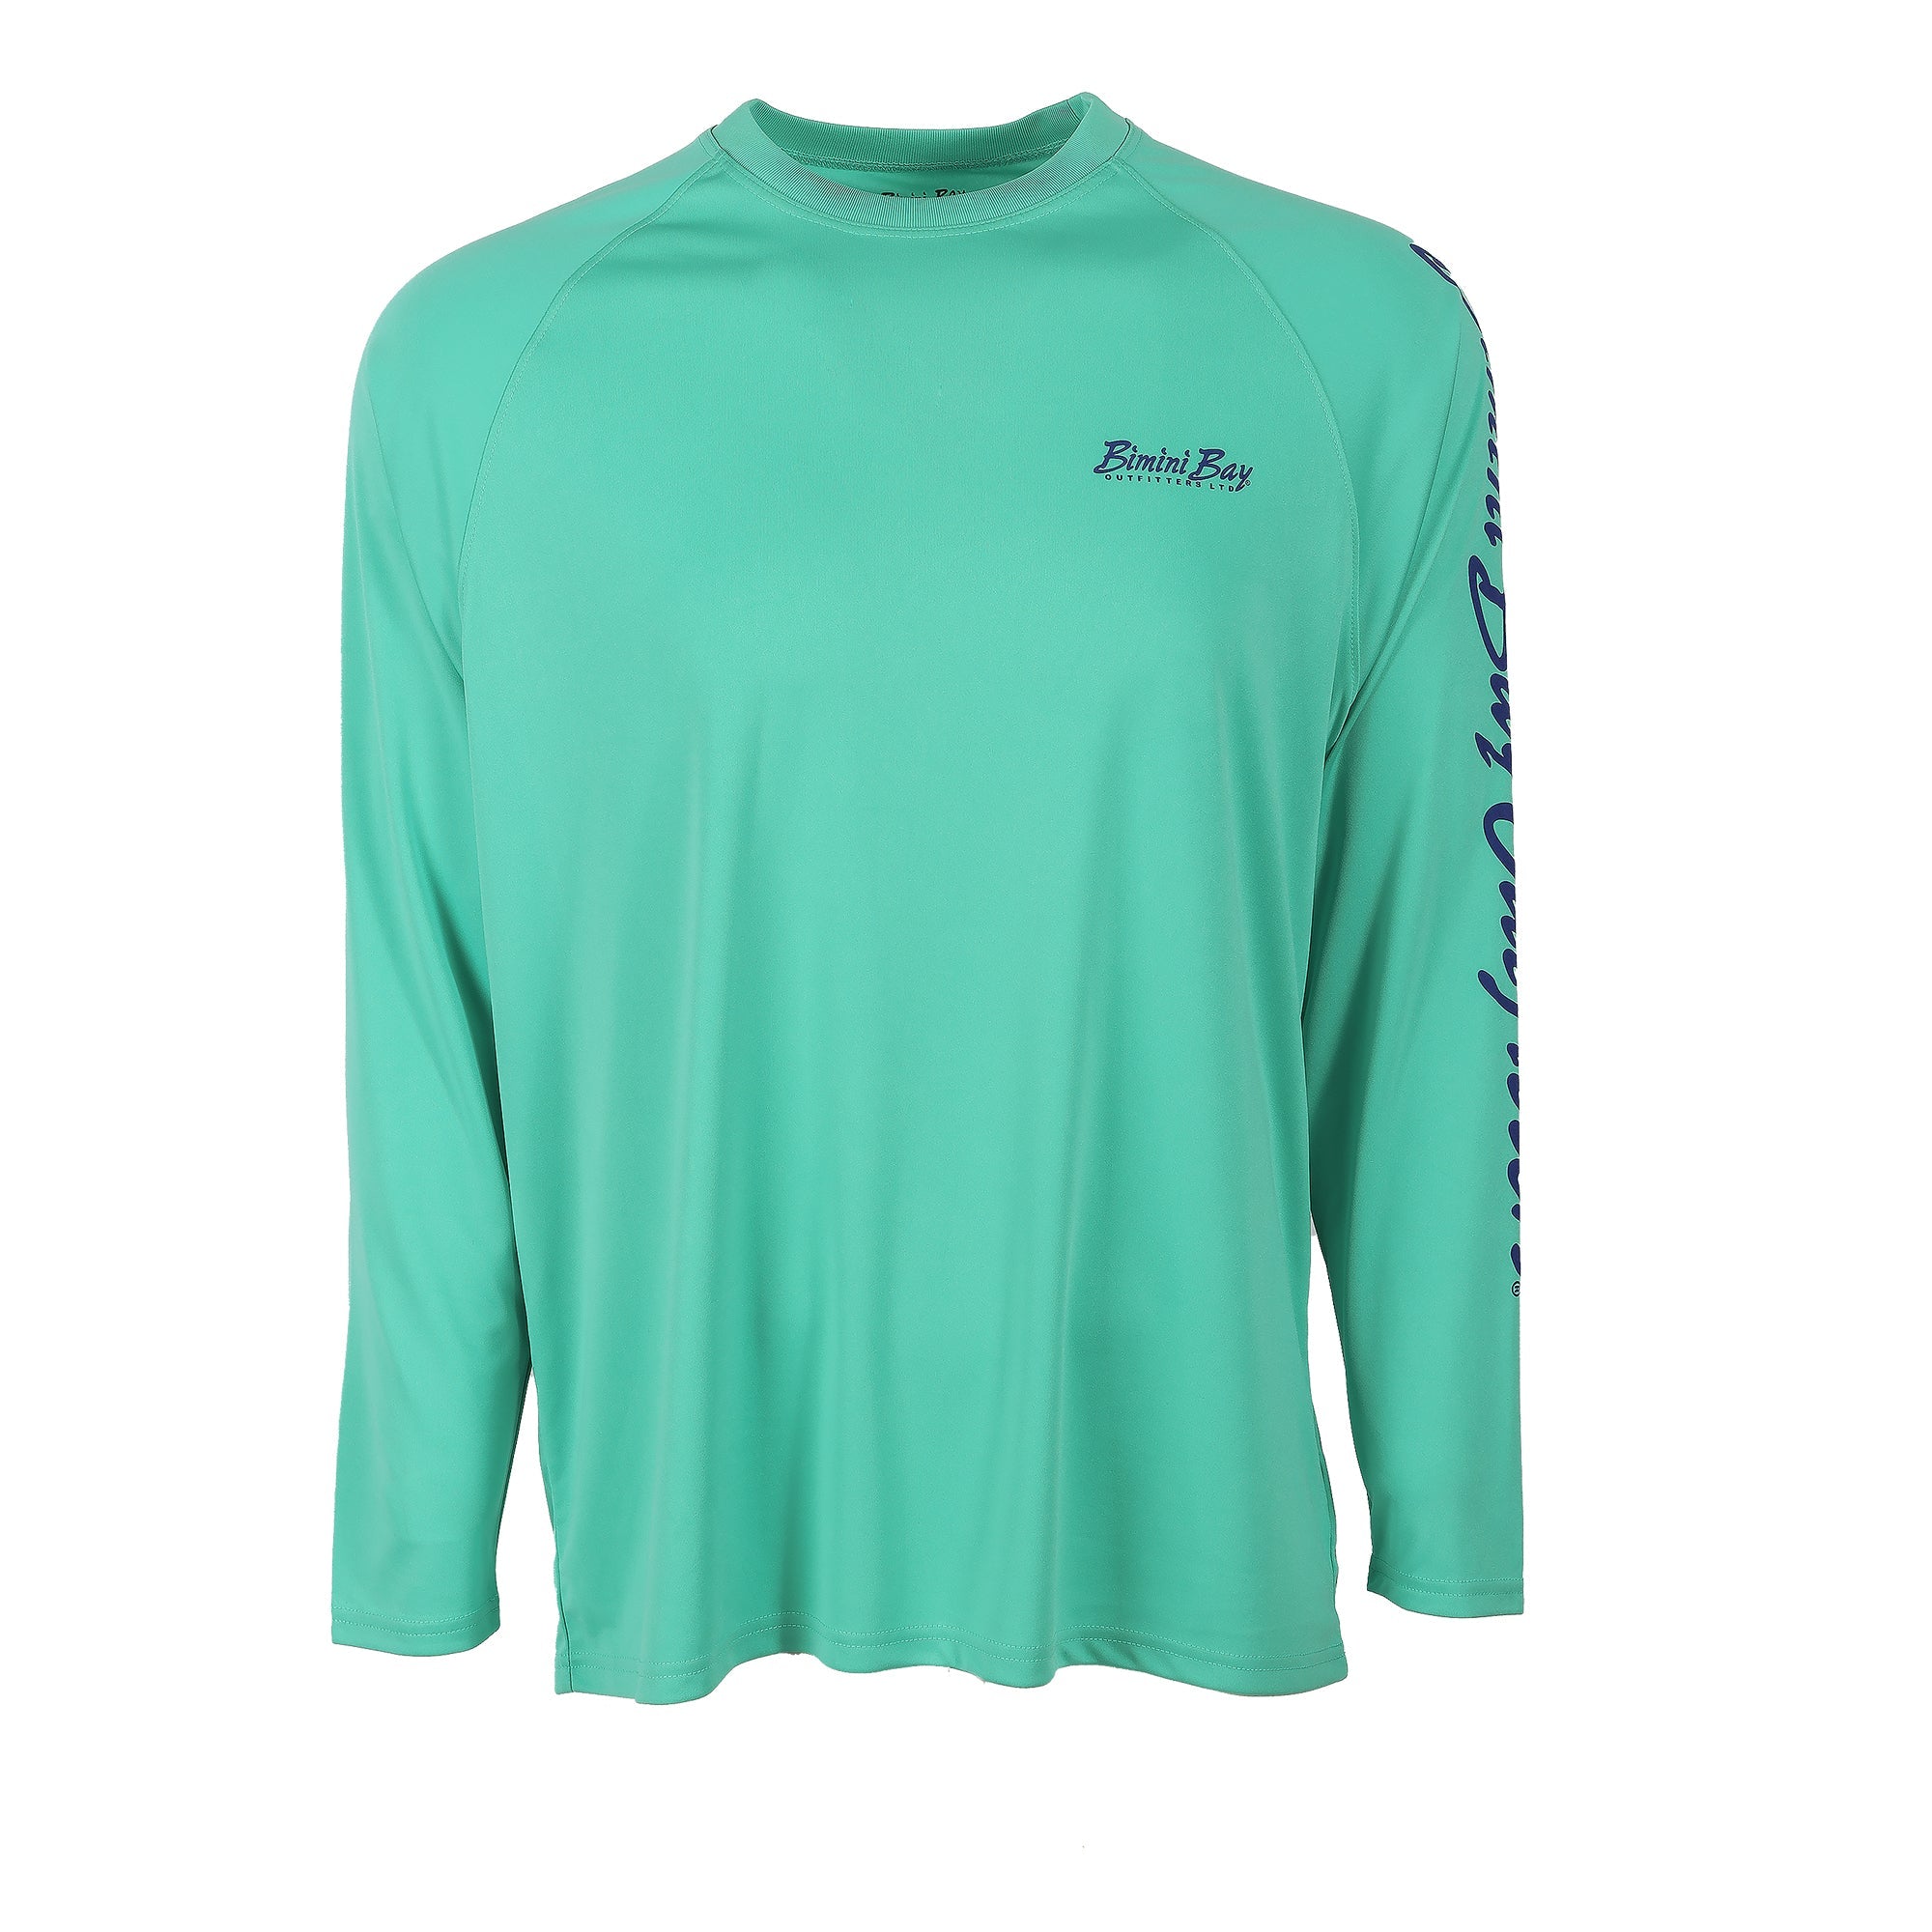  Bimini Bay Outfitters Men's Short Pine Island Plaid Shirt,  Aqua, Medium : Clothing, Shoes & Jewelry